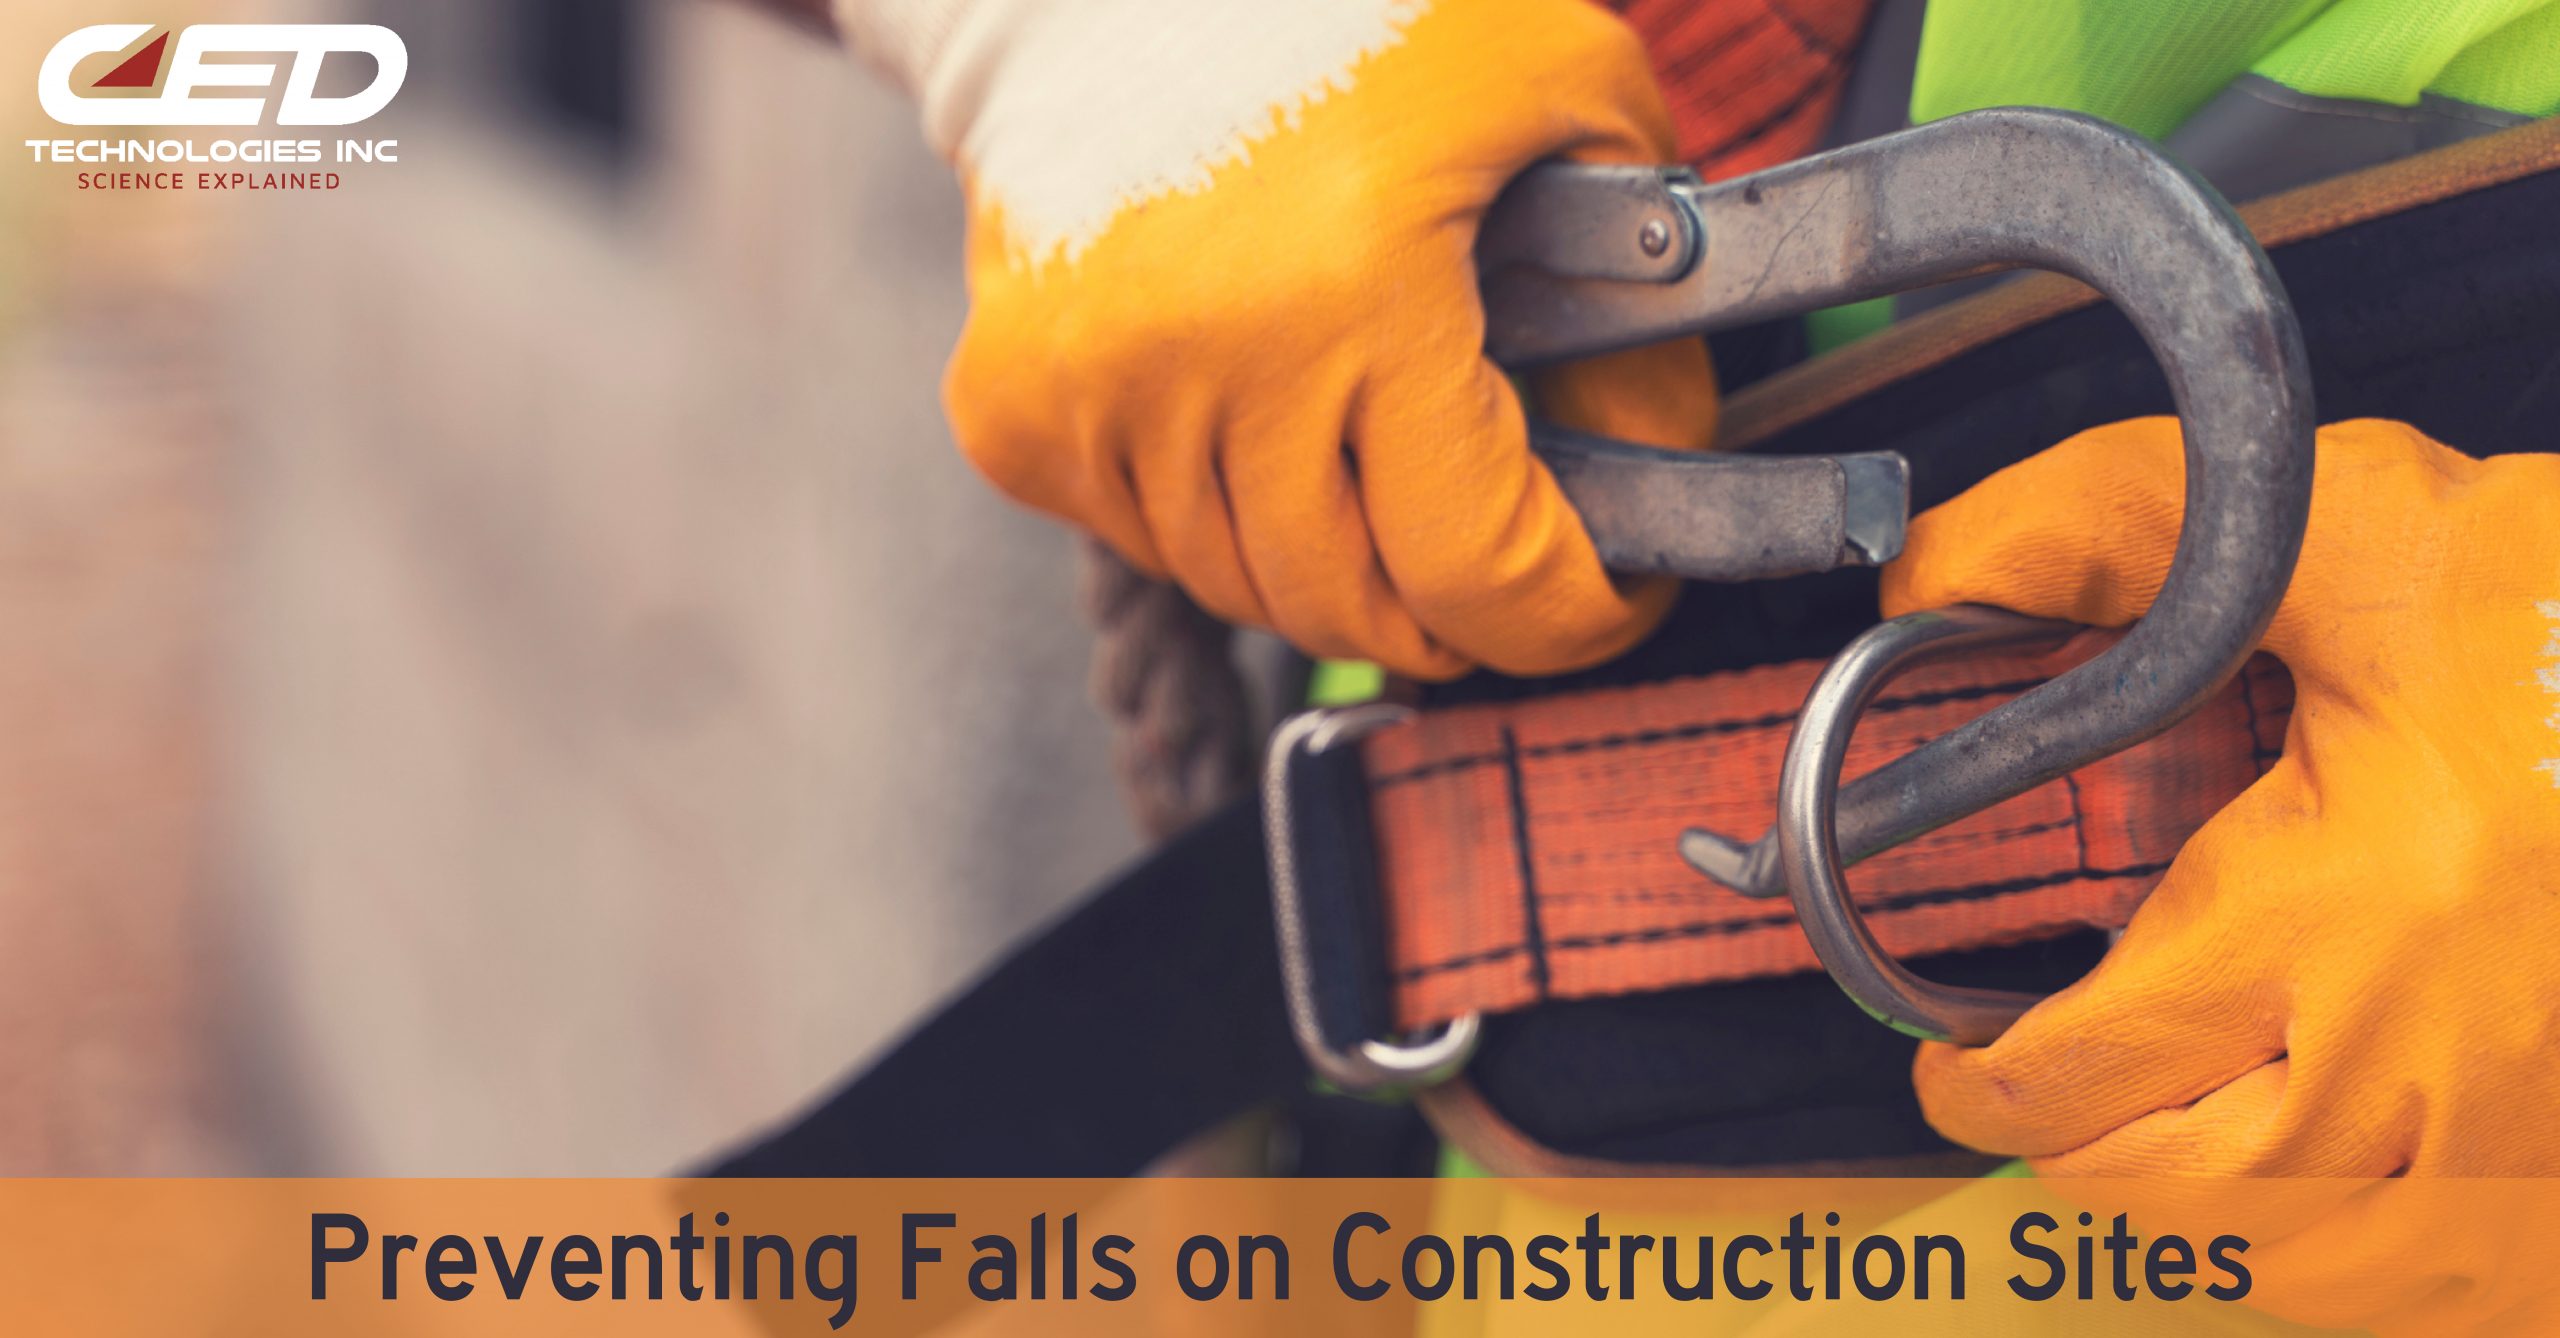 OSHA Facts on Construction Falls